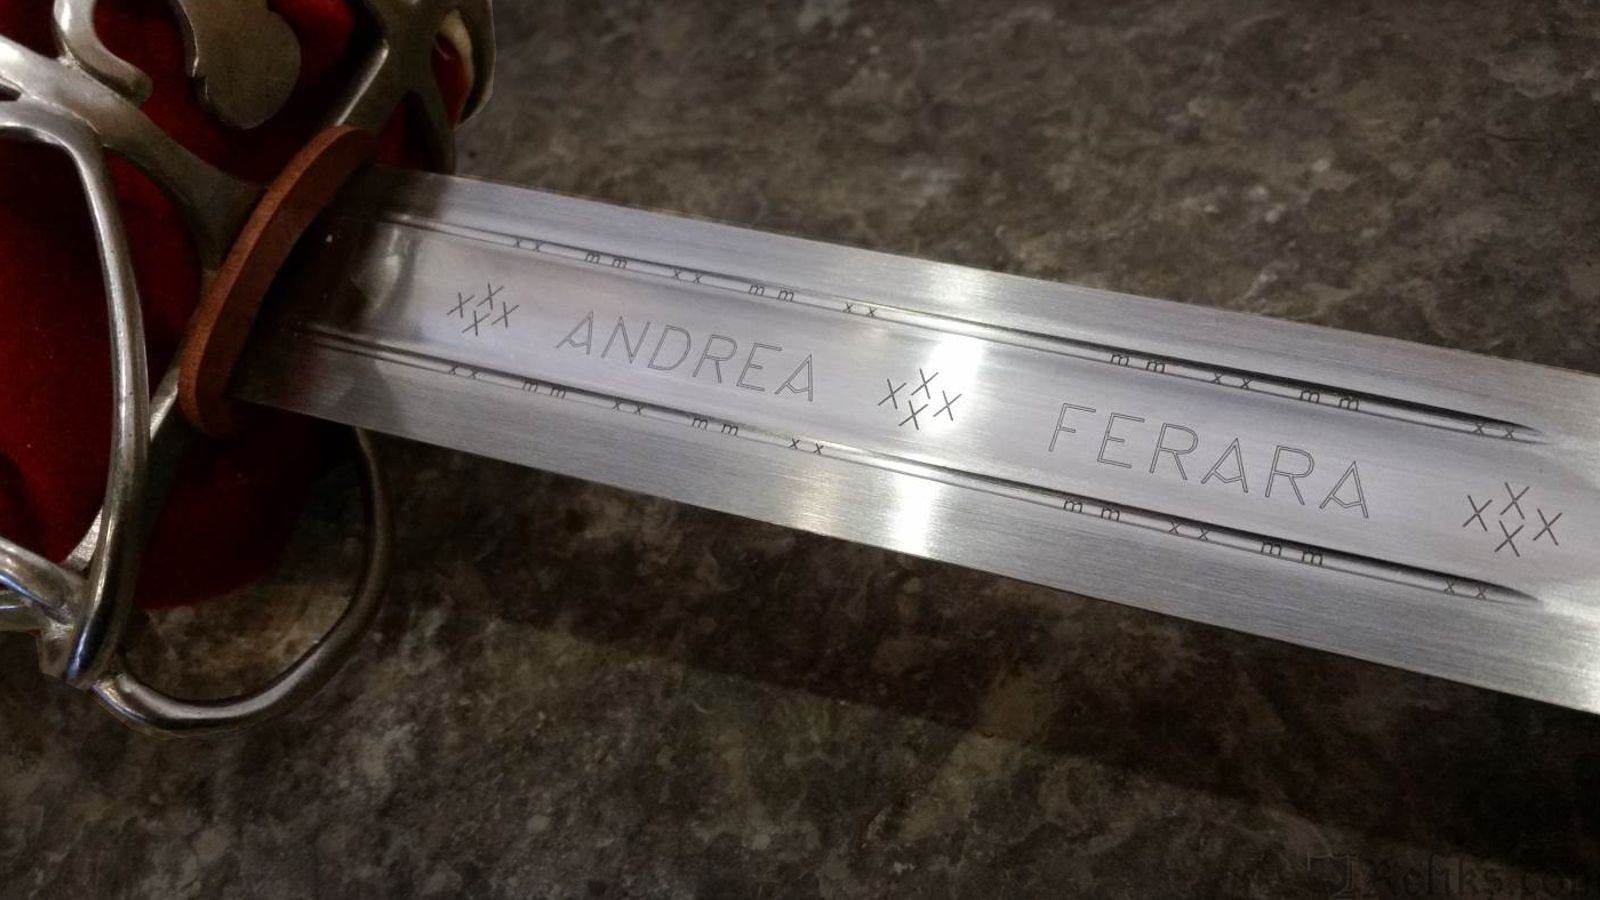 Andrea Ferrara: The Esteemed Sword of Scotland